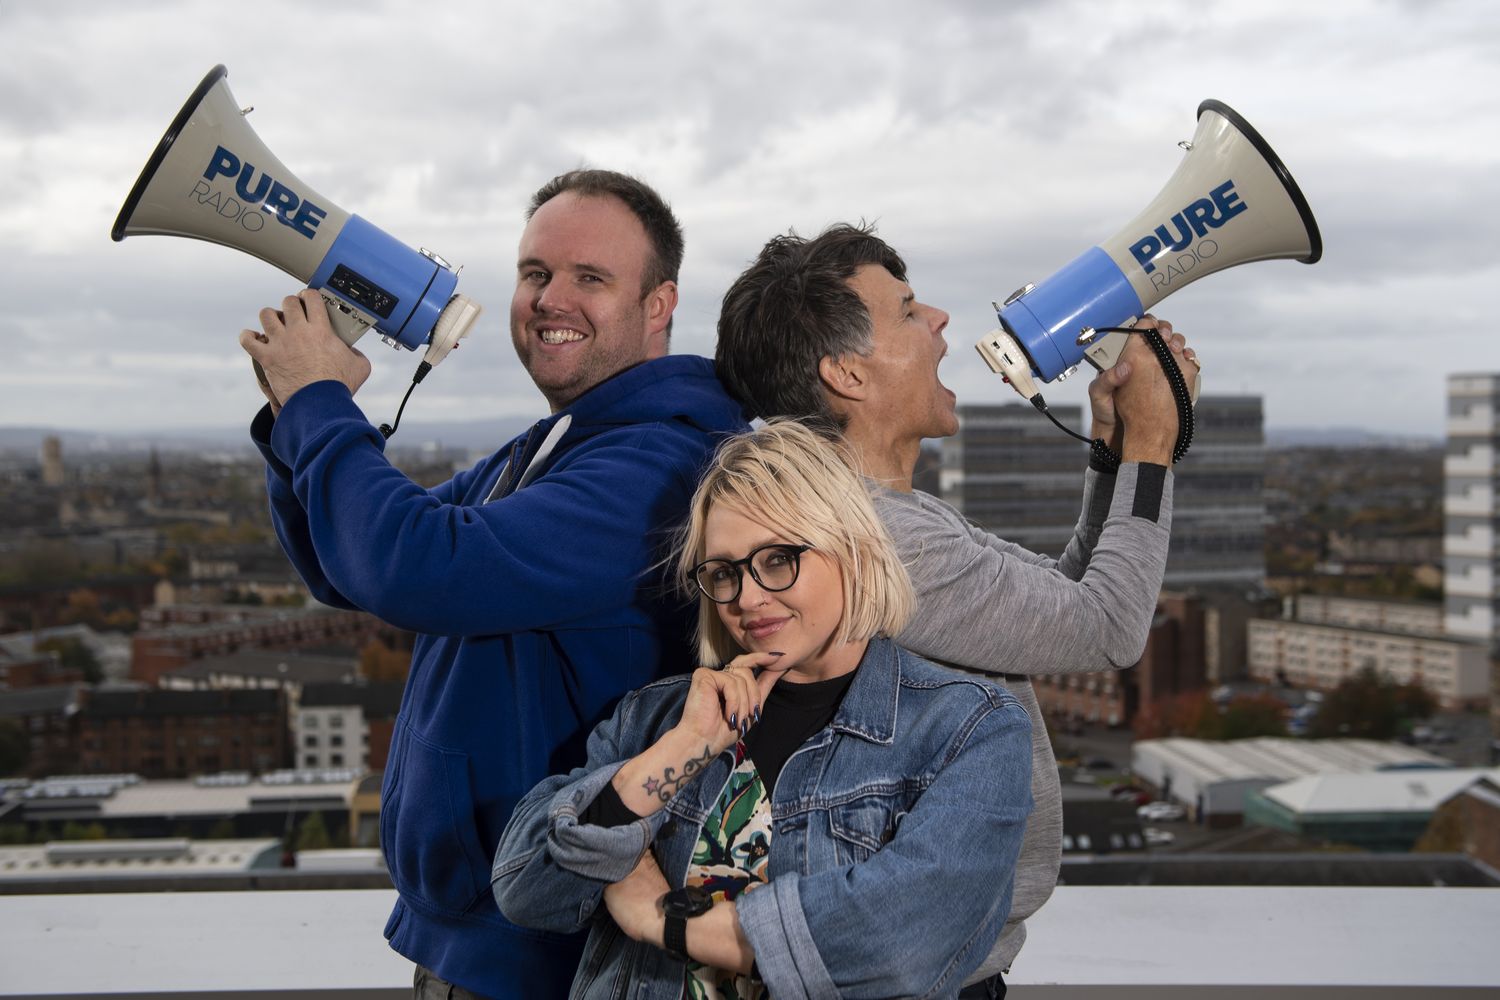 Pure Radio presenters (left to right) Paul Harper, Lynne Hoggan and Robin Galloway